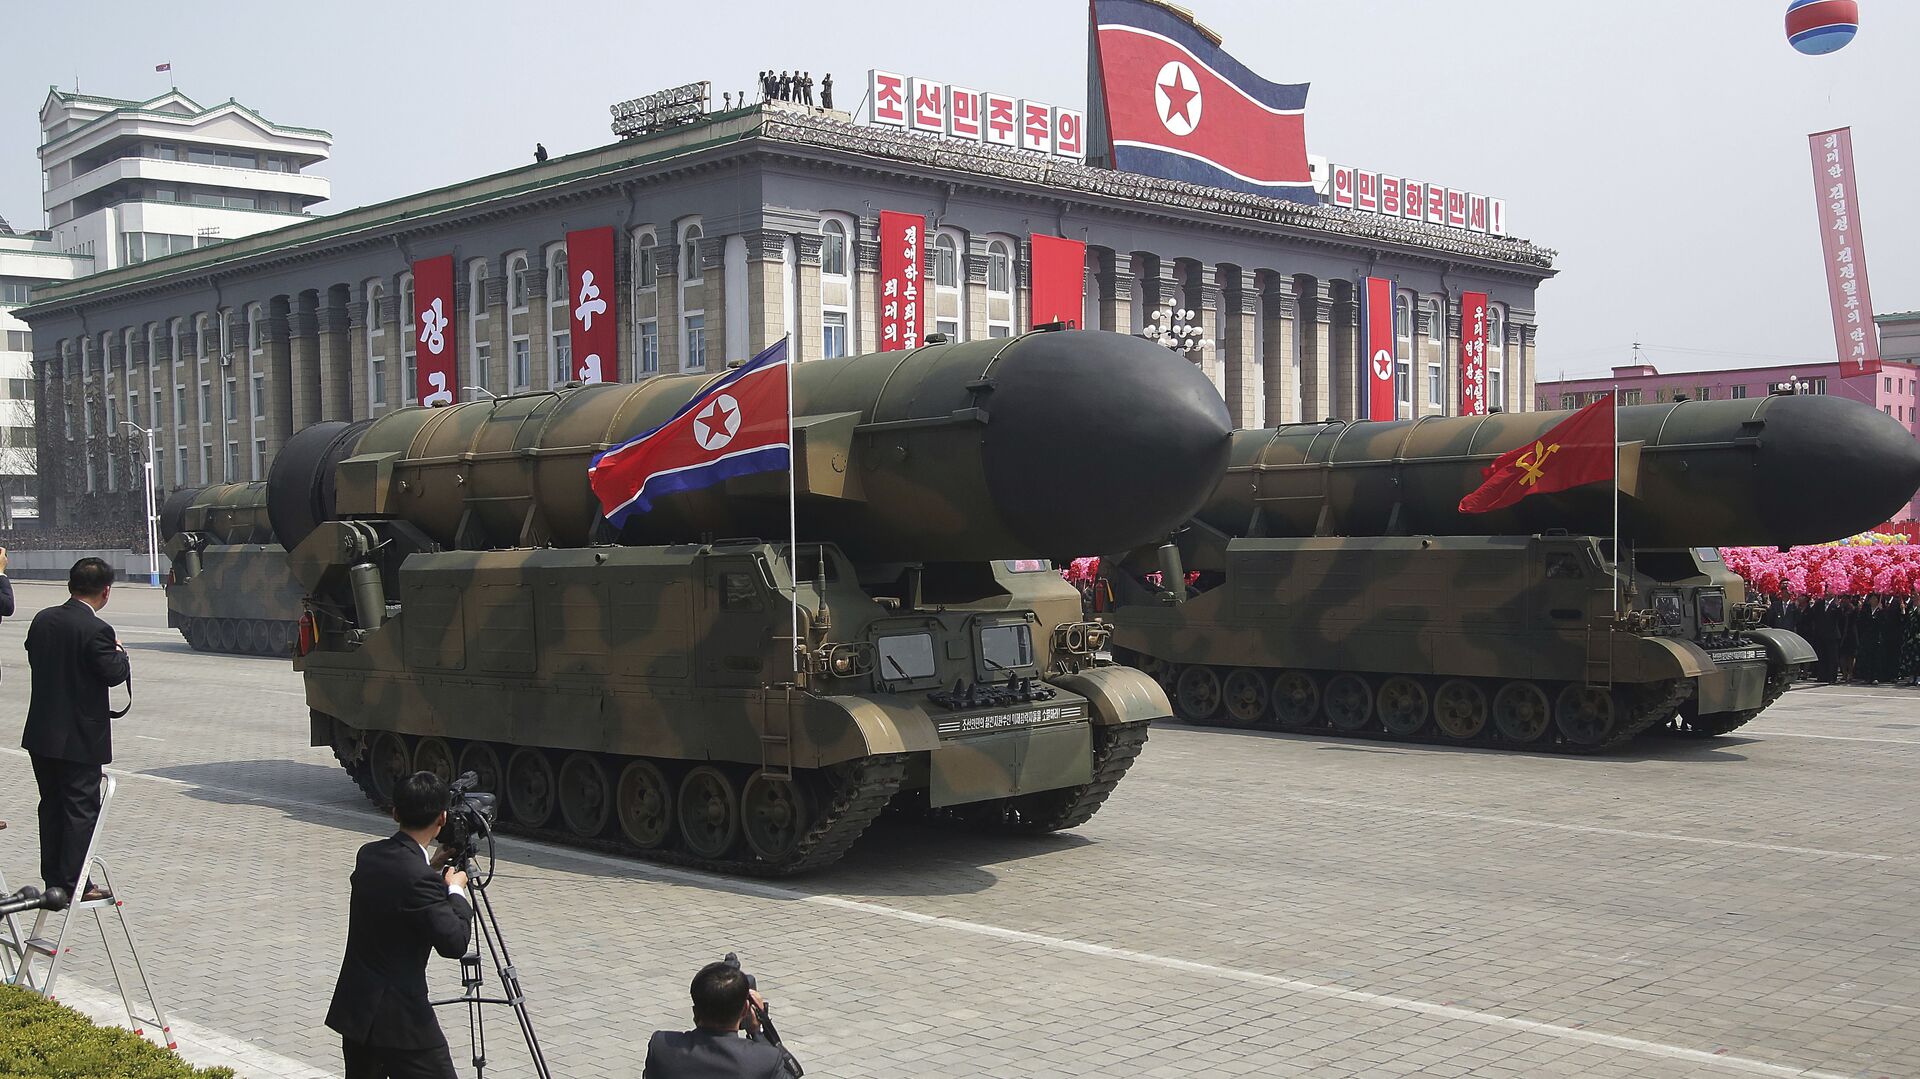 KN-15 Pukkuksong-2 medium-range ballistic missile paraded across Kim Il Sung Square in Pyongyang during a military parade Saturday, April 15, 2017. - Sputnik International, 1920, 31.05.2022